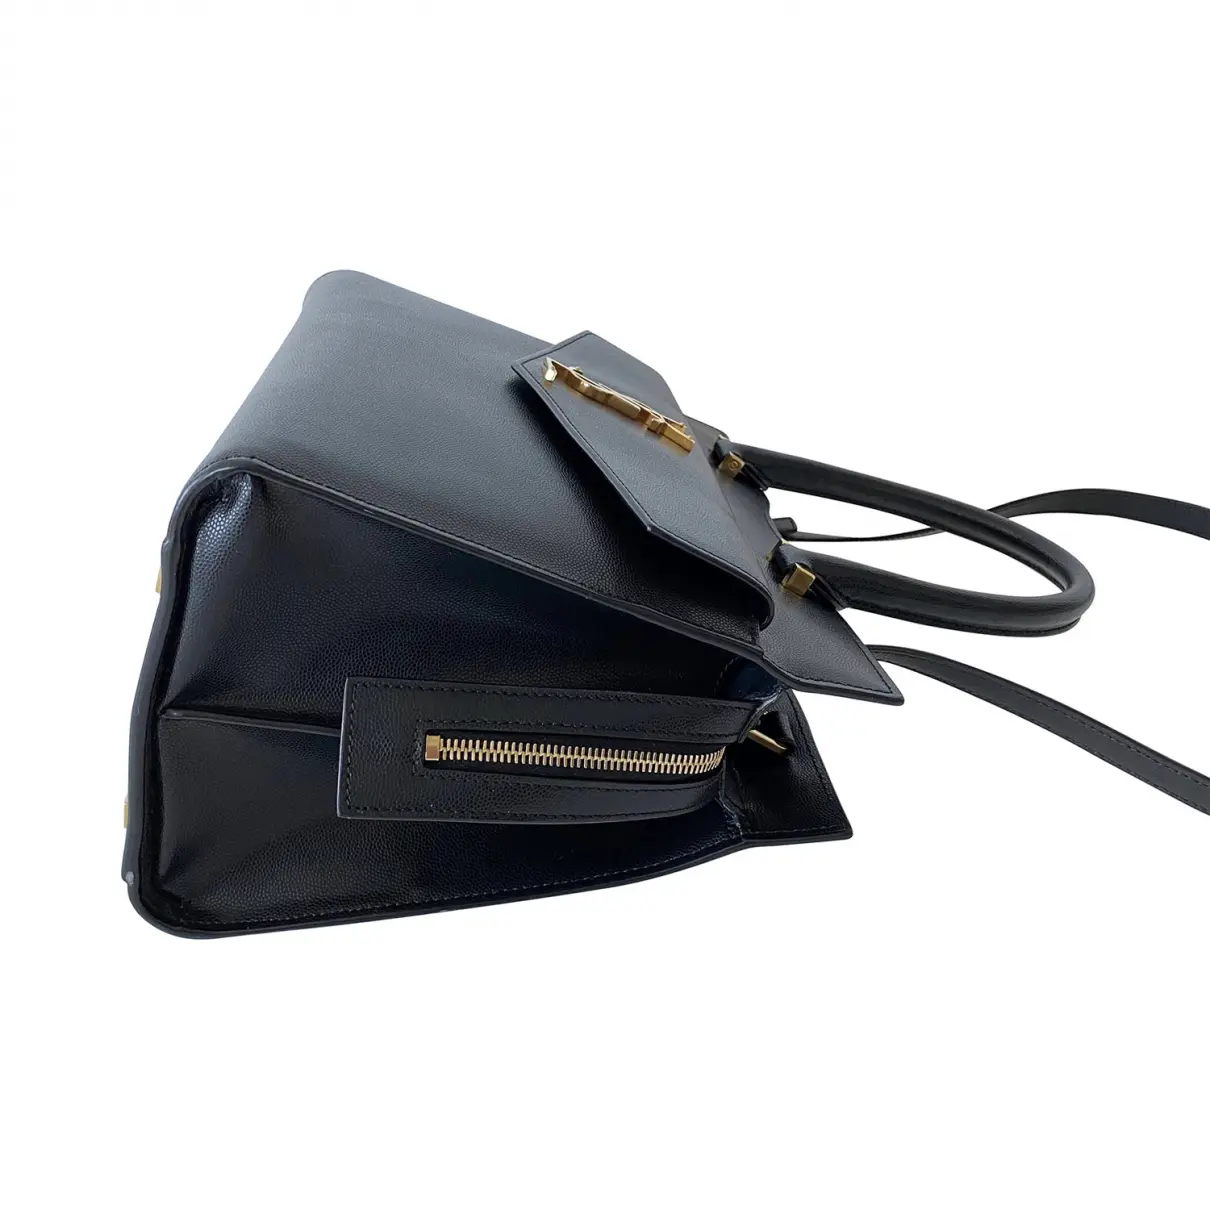 Uptown leather handbag Saint Laurent